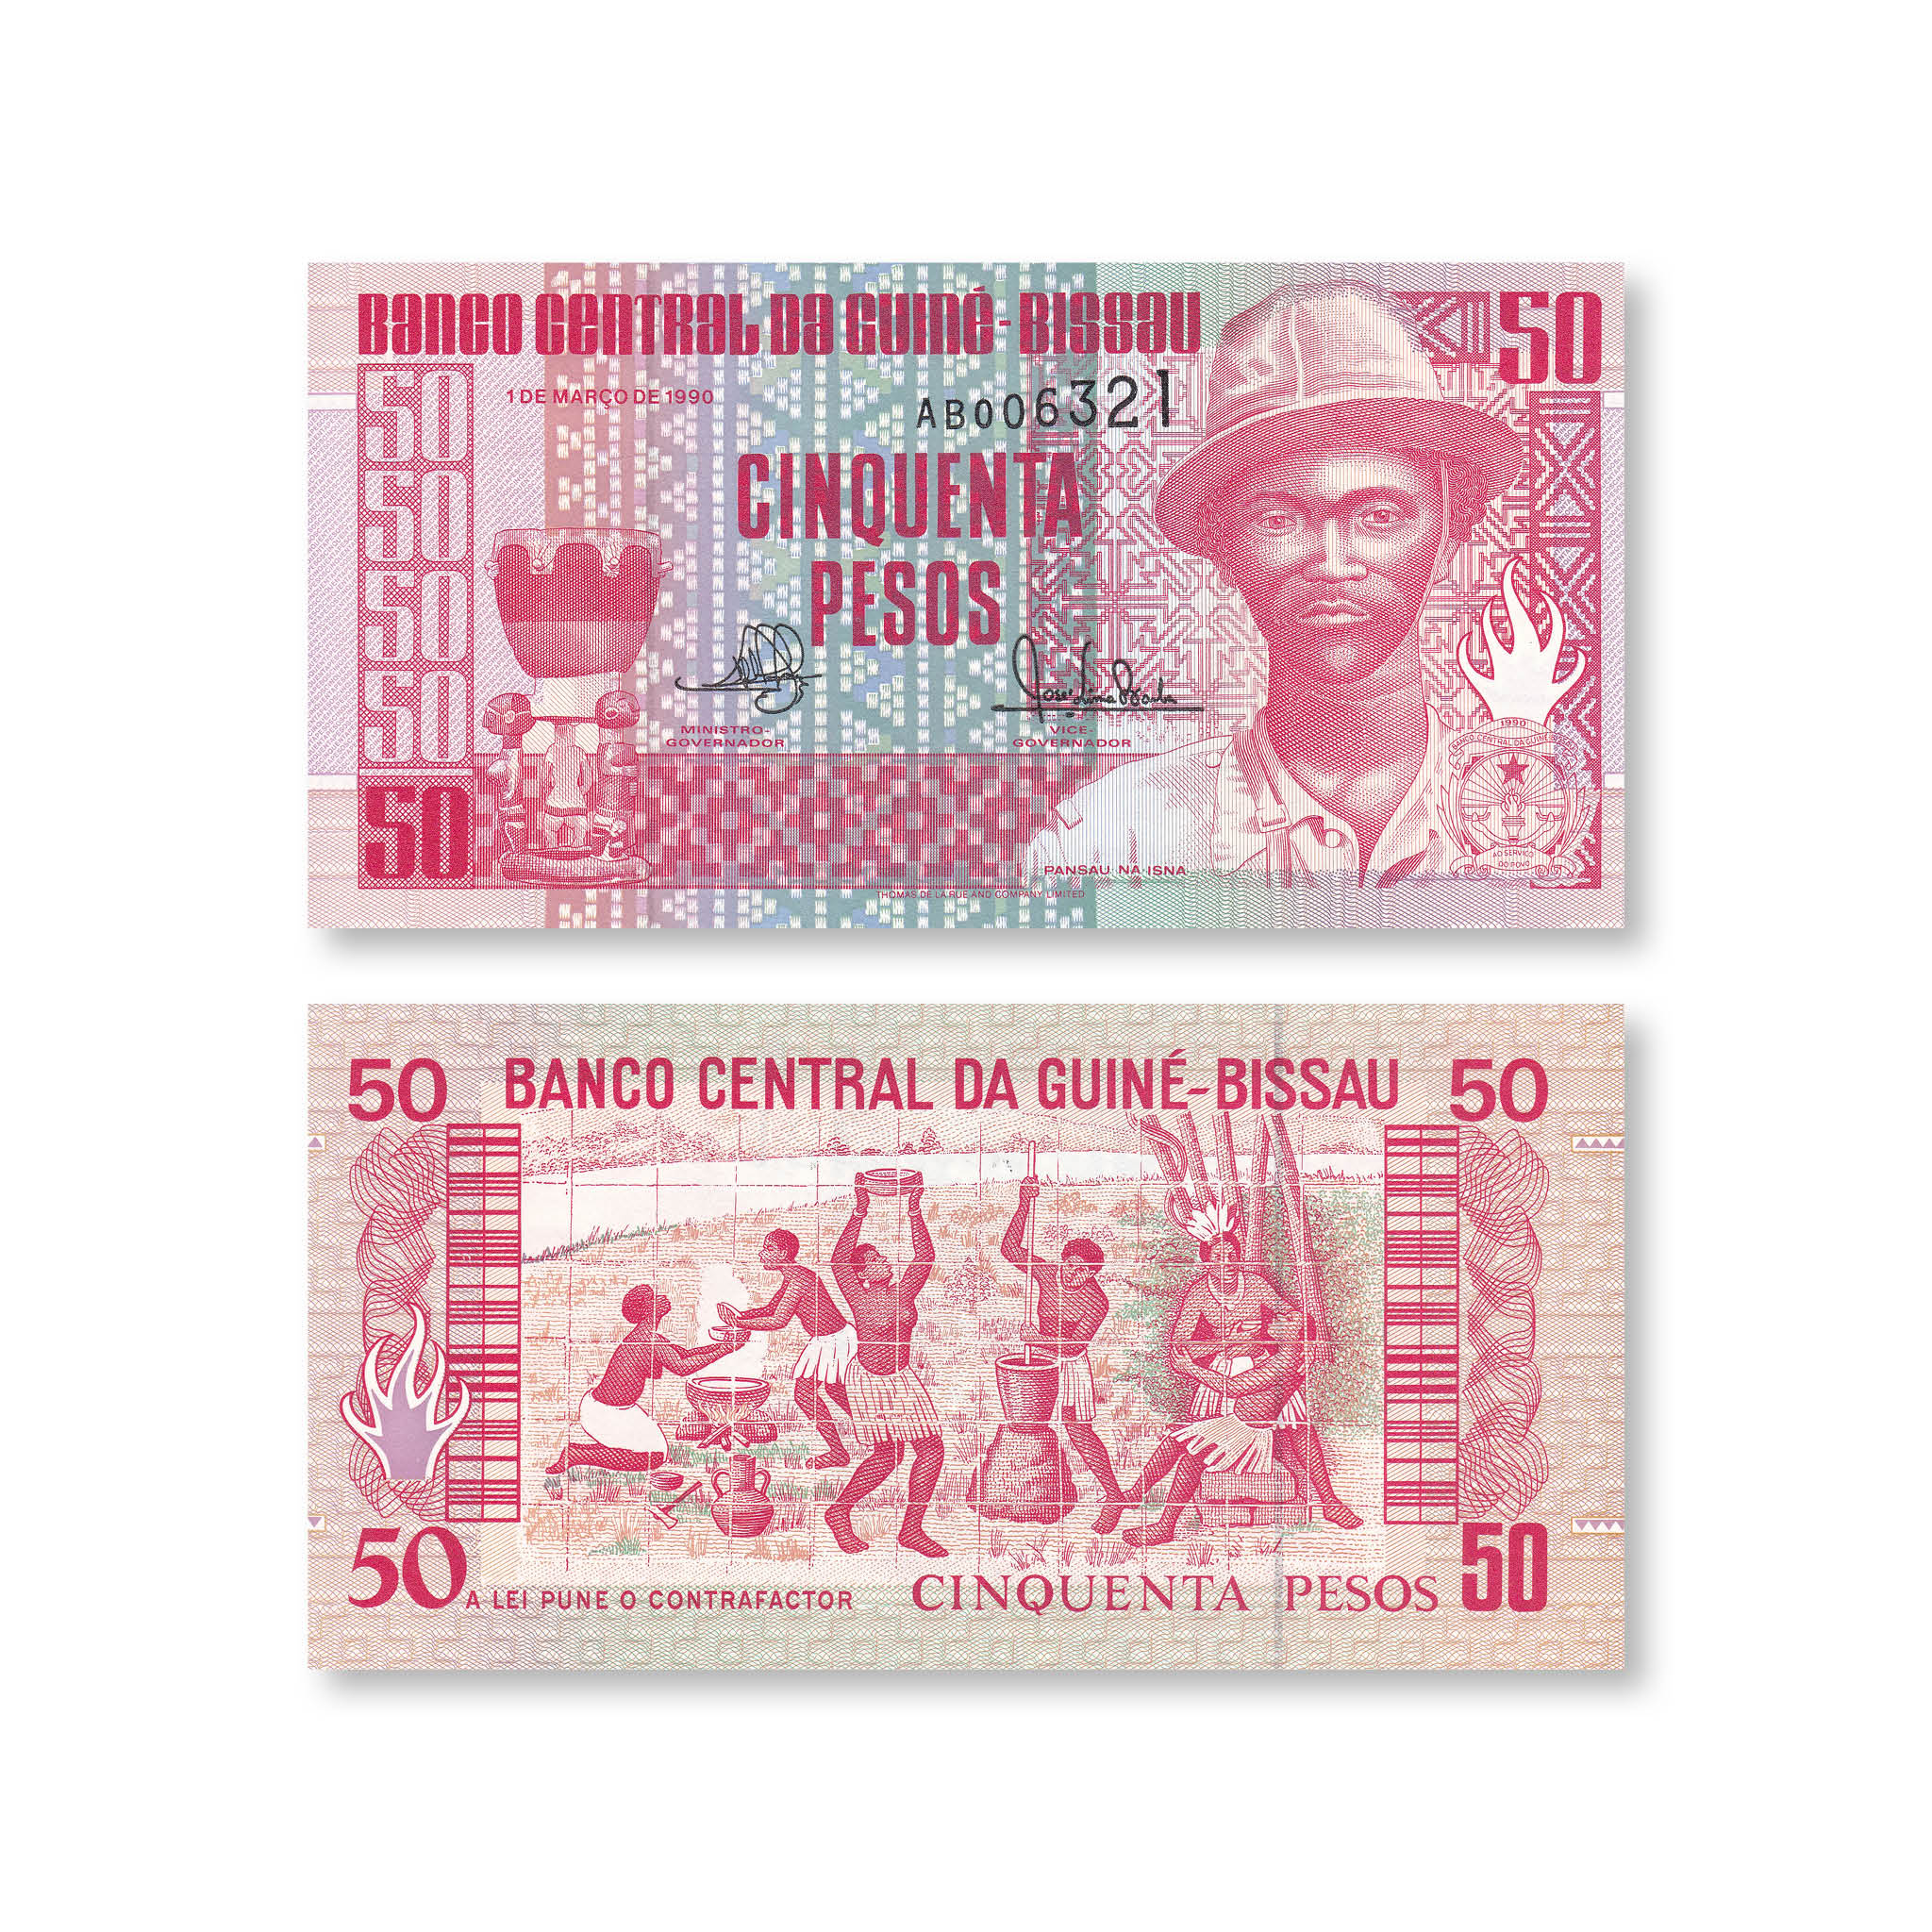 Guinea-Bissau 50 Pesos, 1990, B201a, P10, UNC - Robert's World Money - World Banknotes